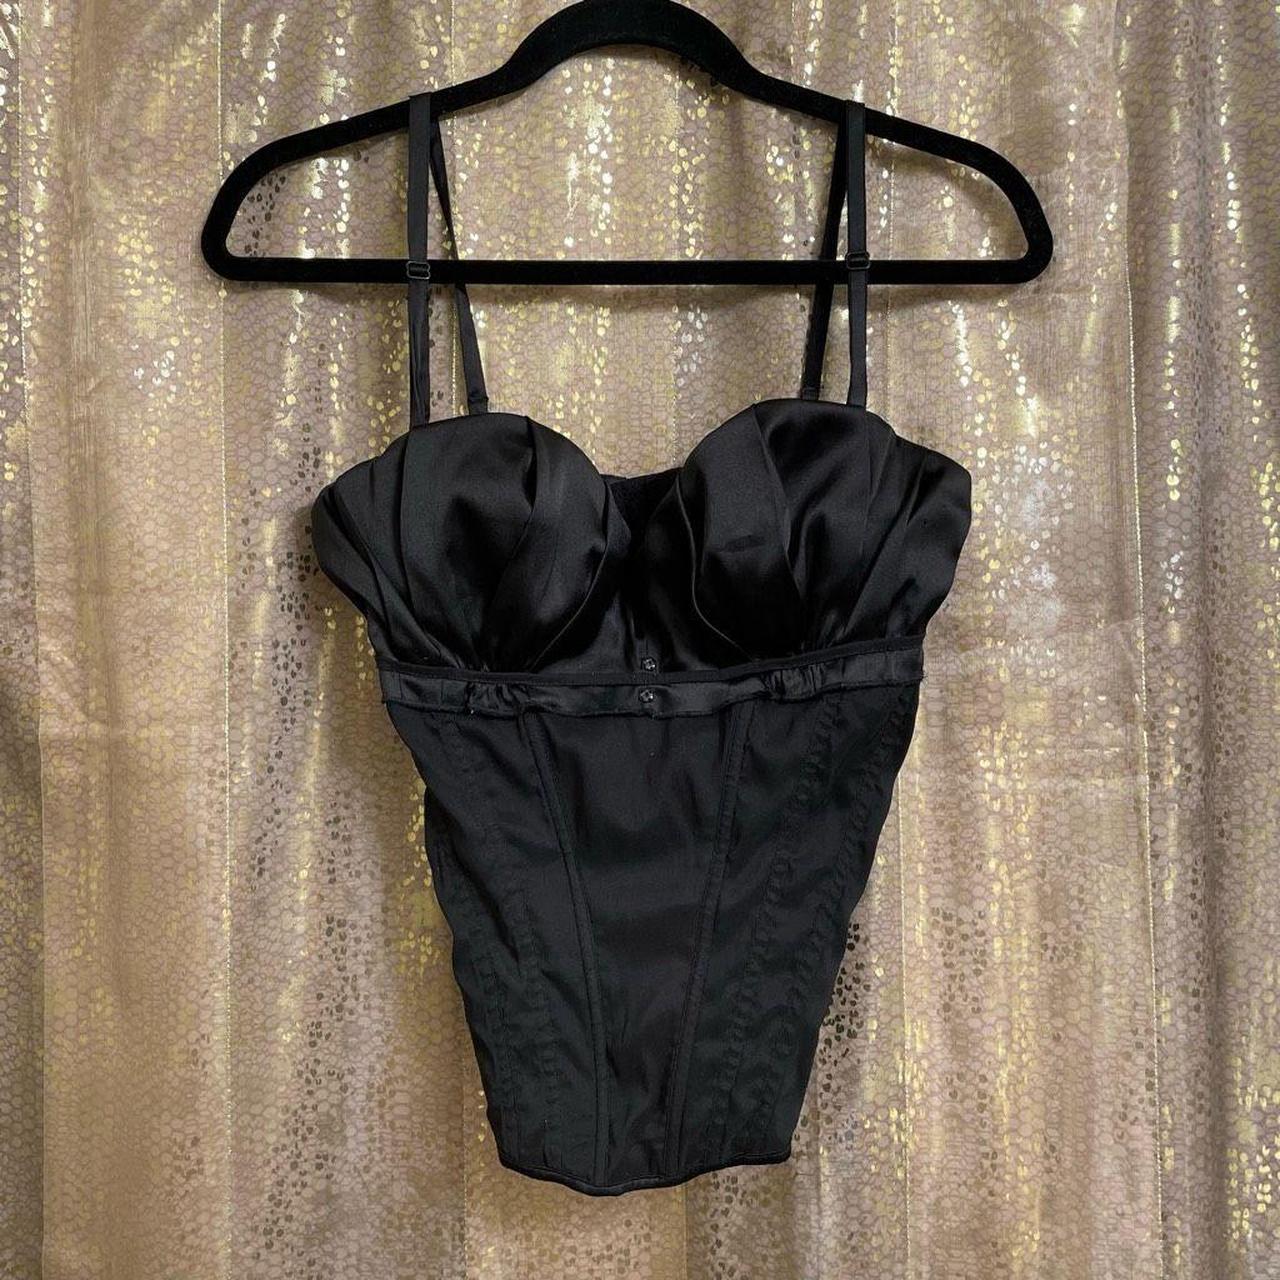 Vintage Victoria’s Secret bra size 36C , black